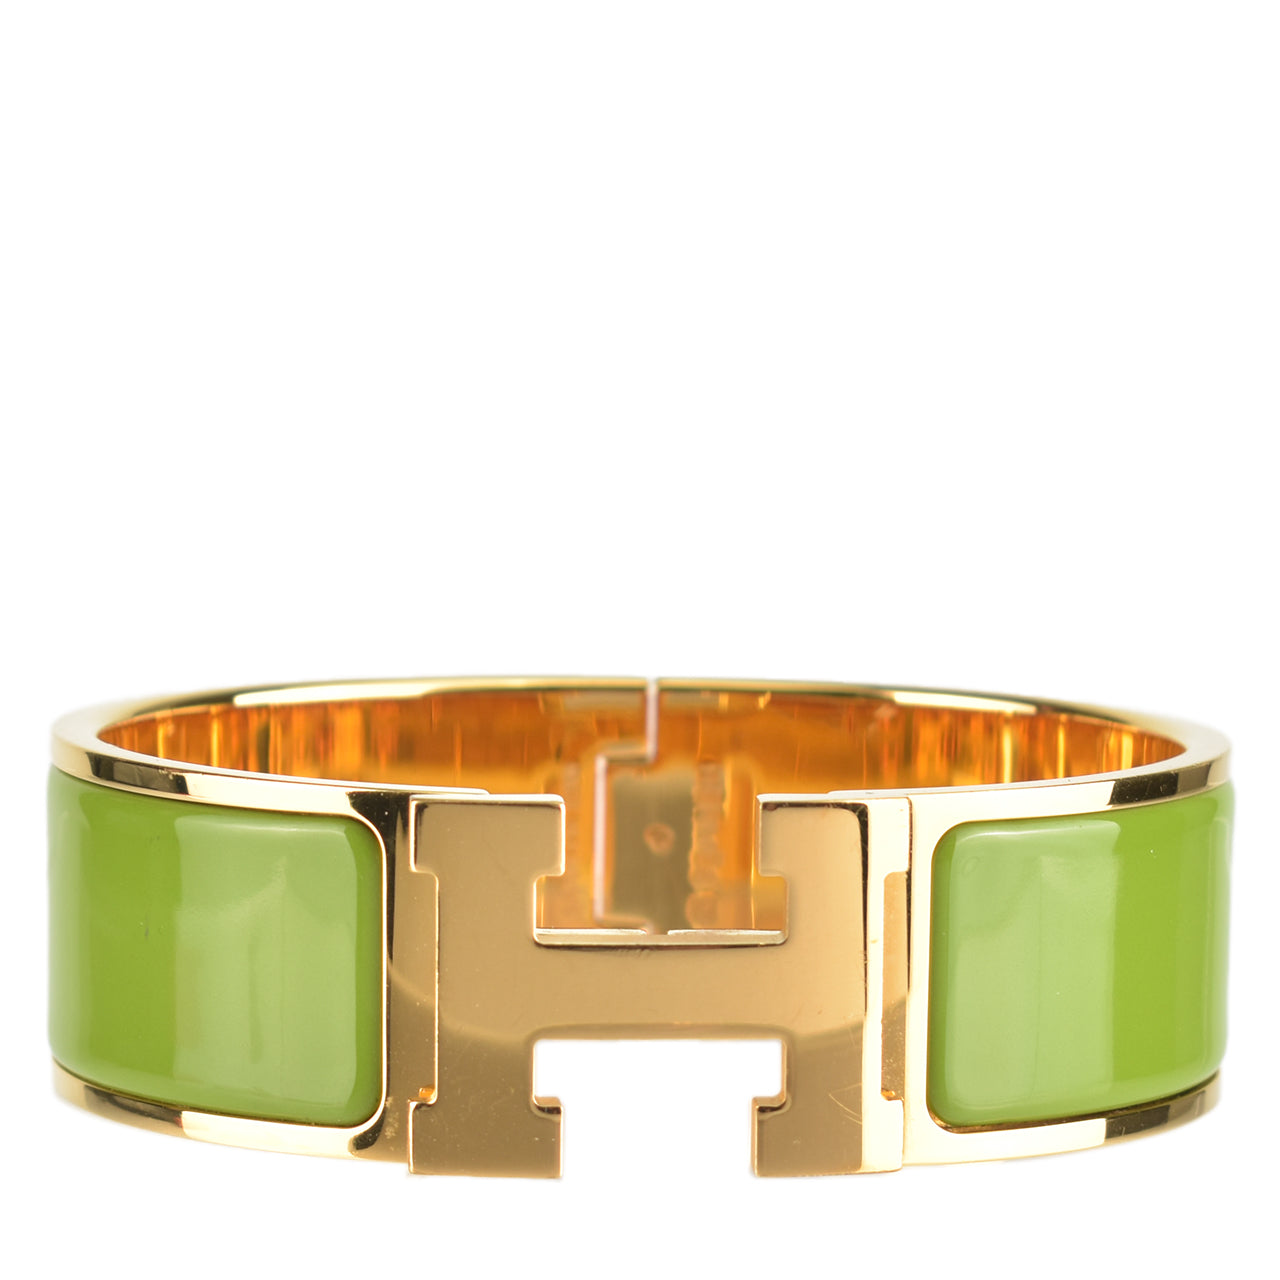 Clic Clac H Bracelet in Green GHW